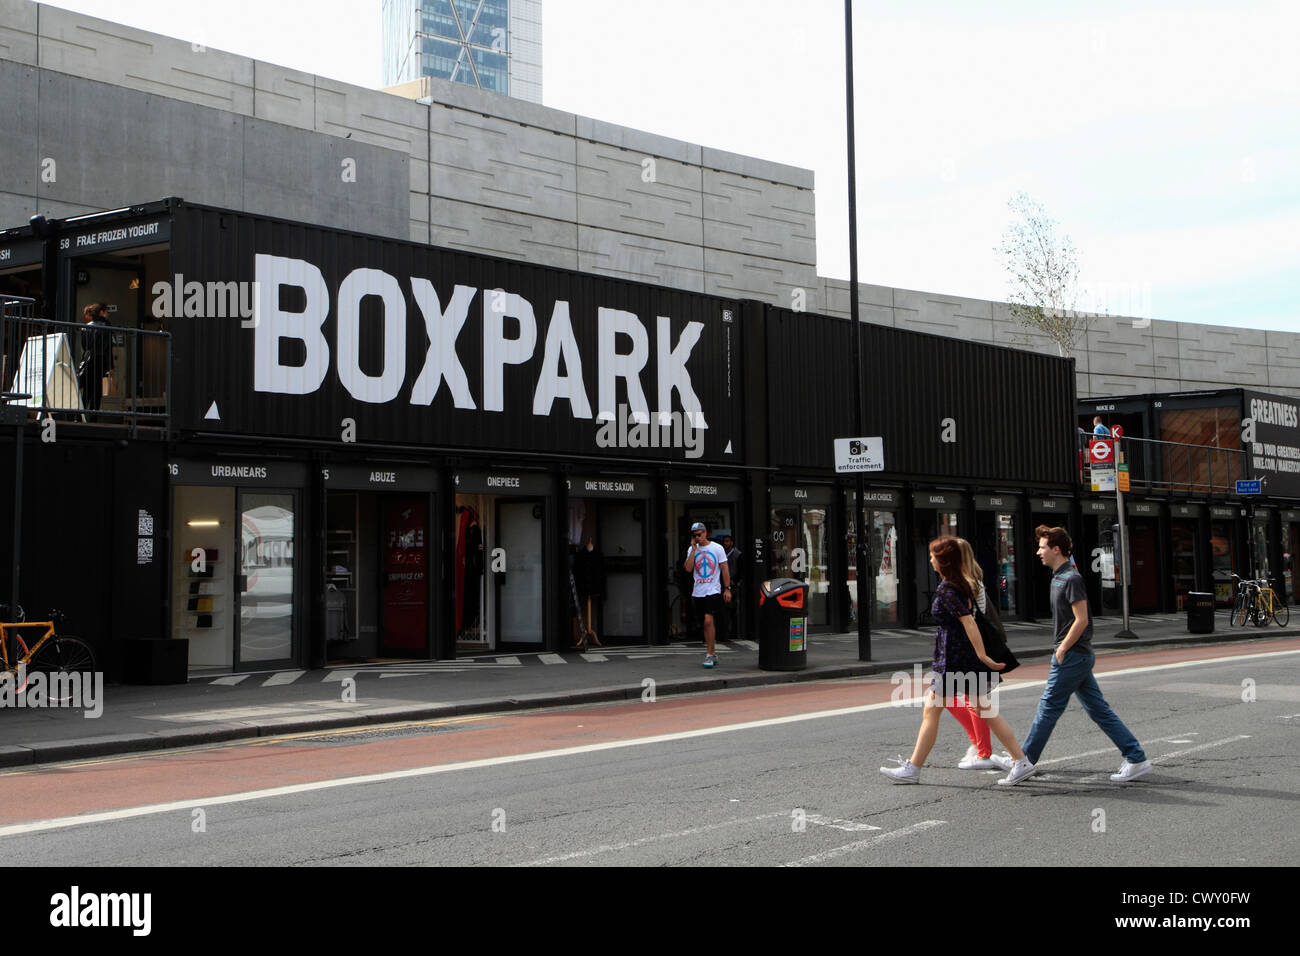 Boxpark, Shoreditch, London, UK Stock Photo